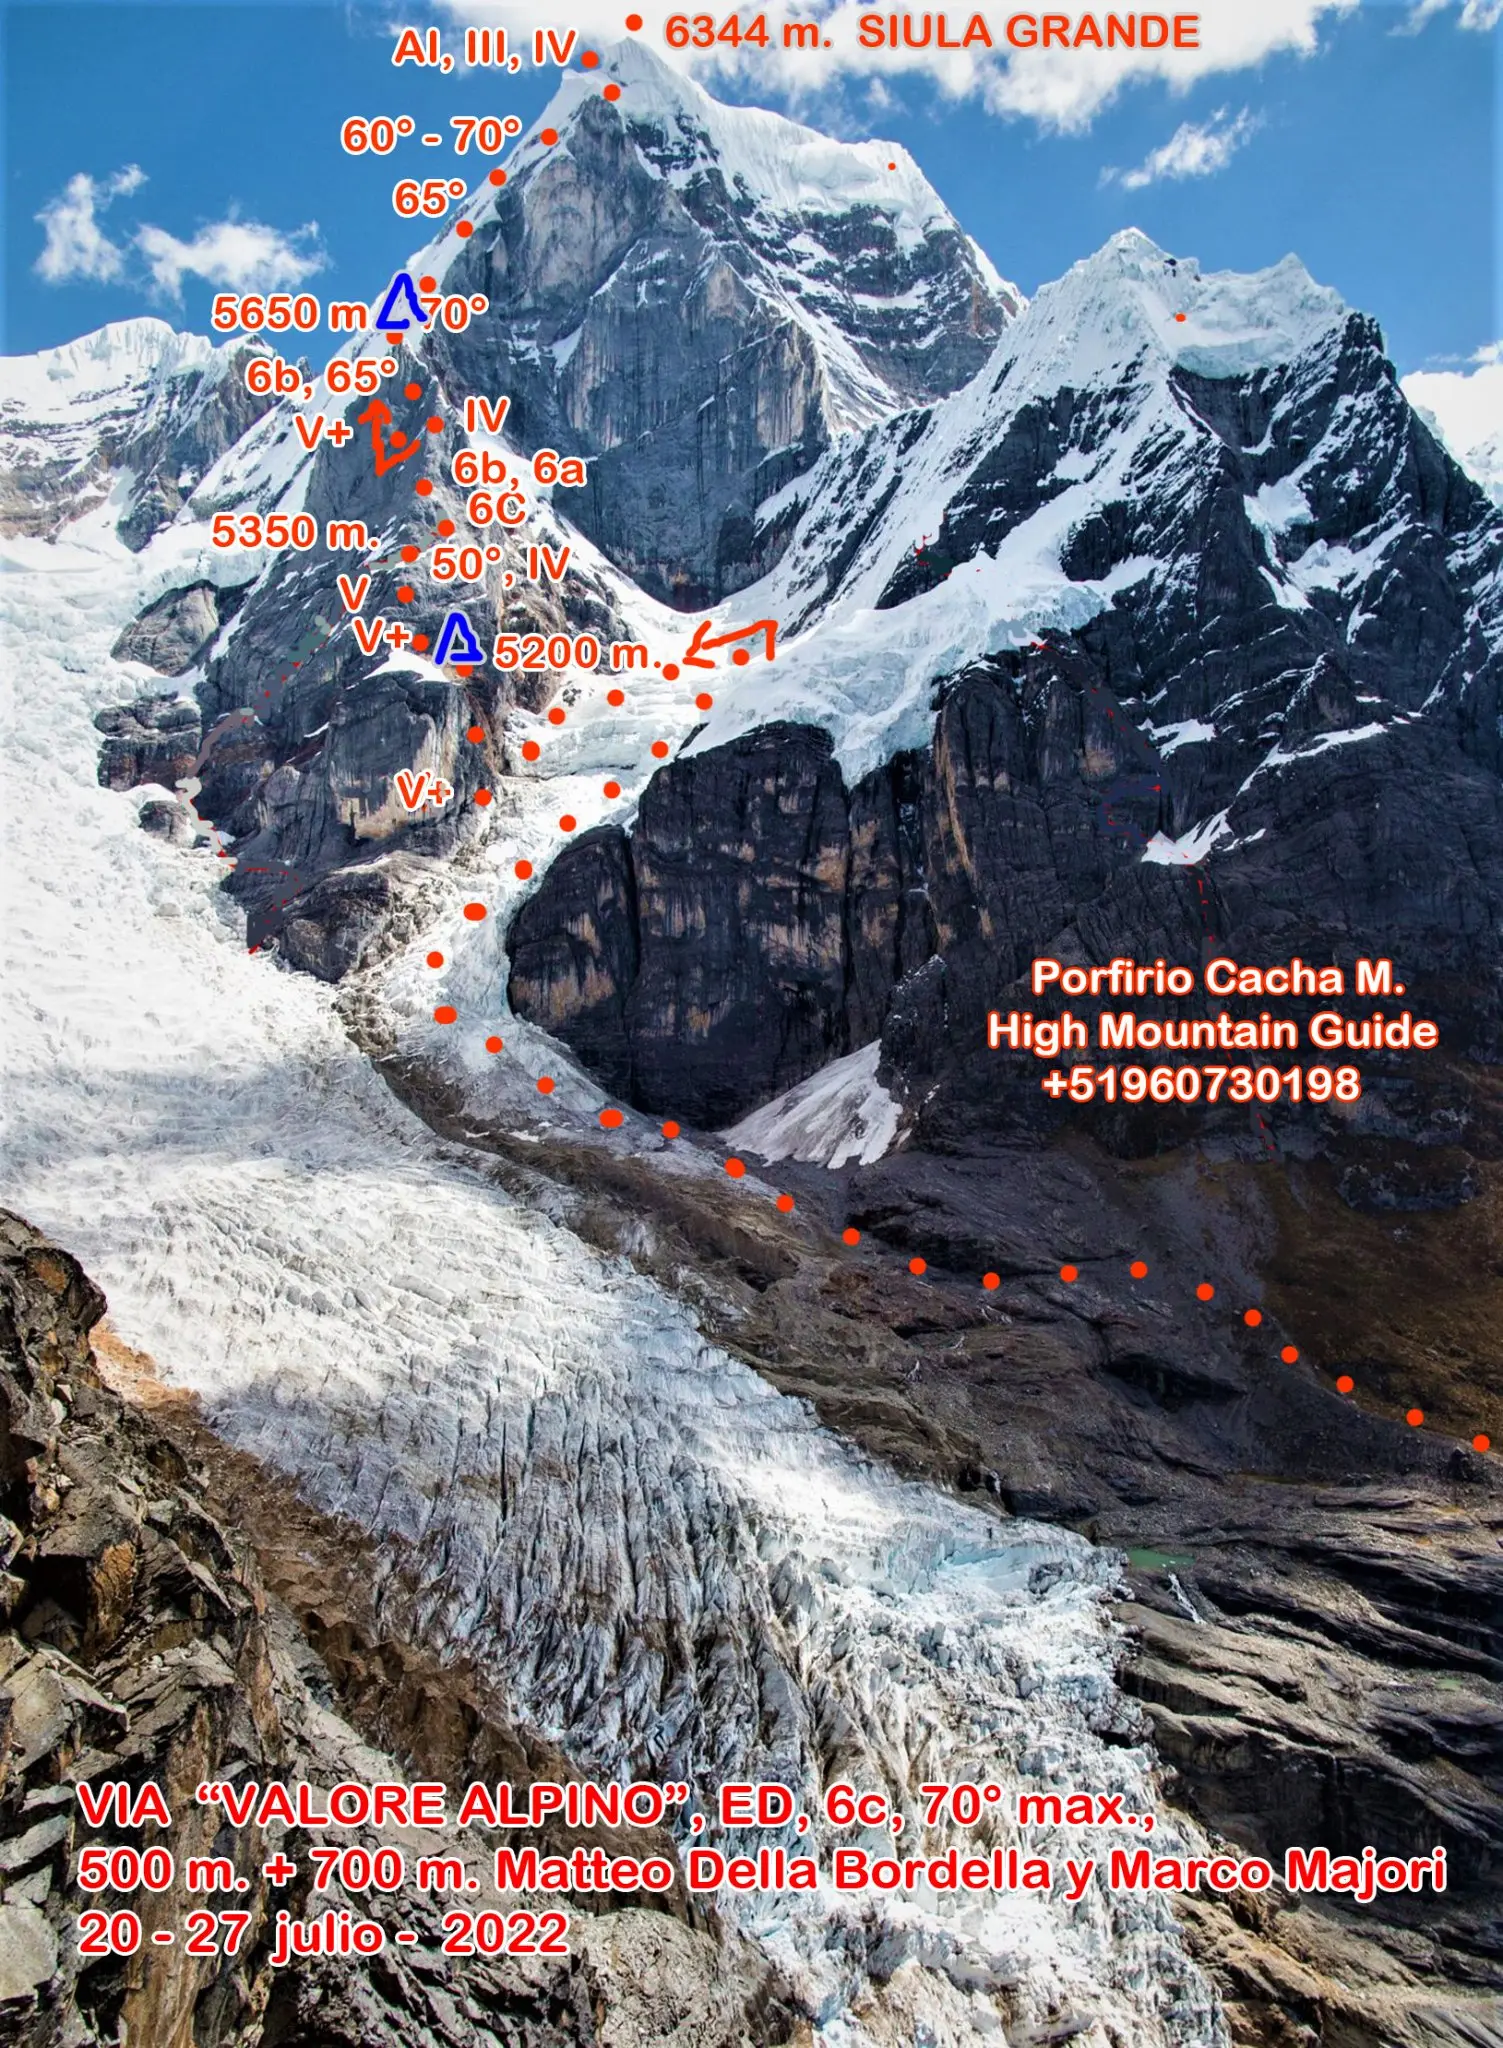 Маршрут "Valore Alpino" на вершину Сіула-Гранде (Siula Grande) висотою 6344 метрів. Фото Matteo Della Bordella